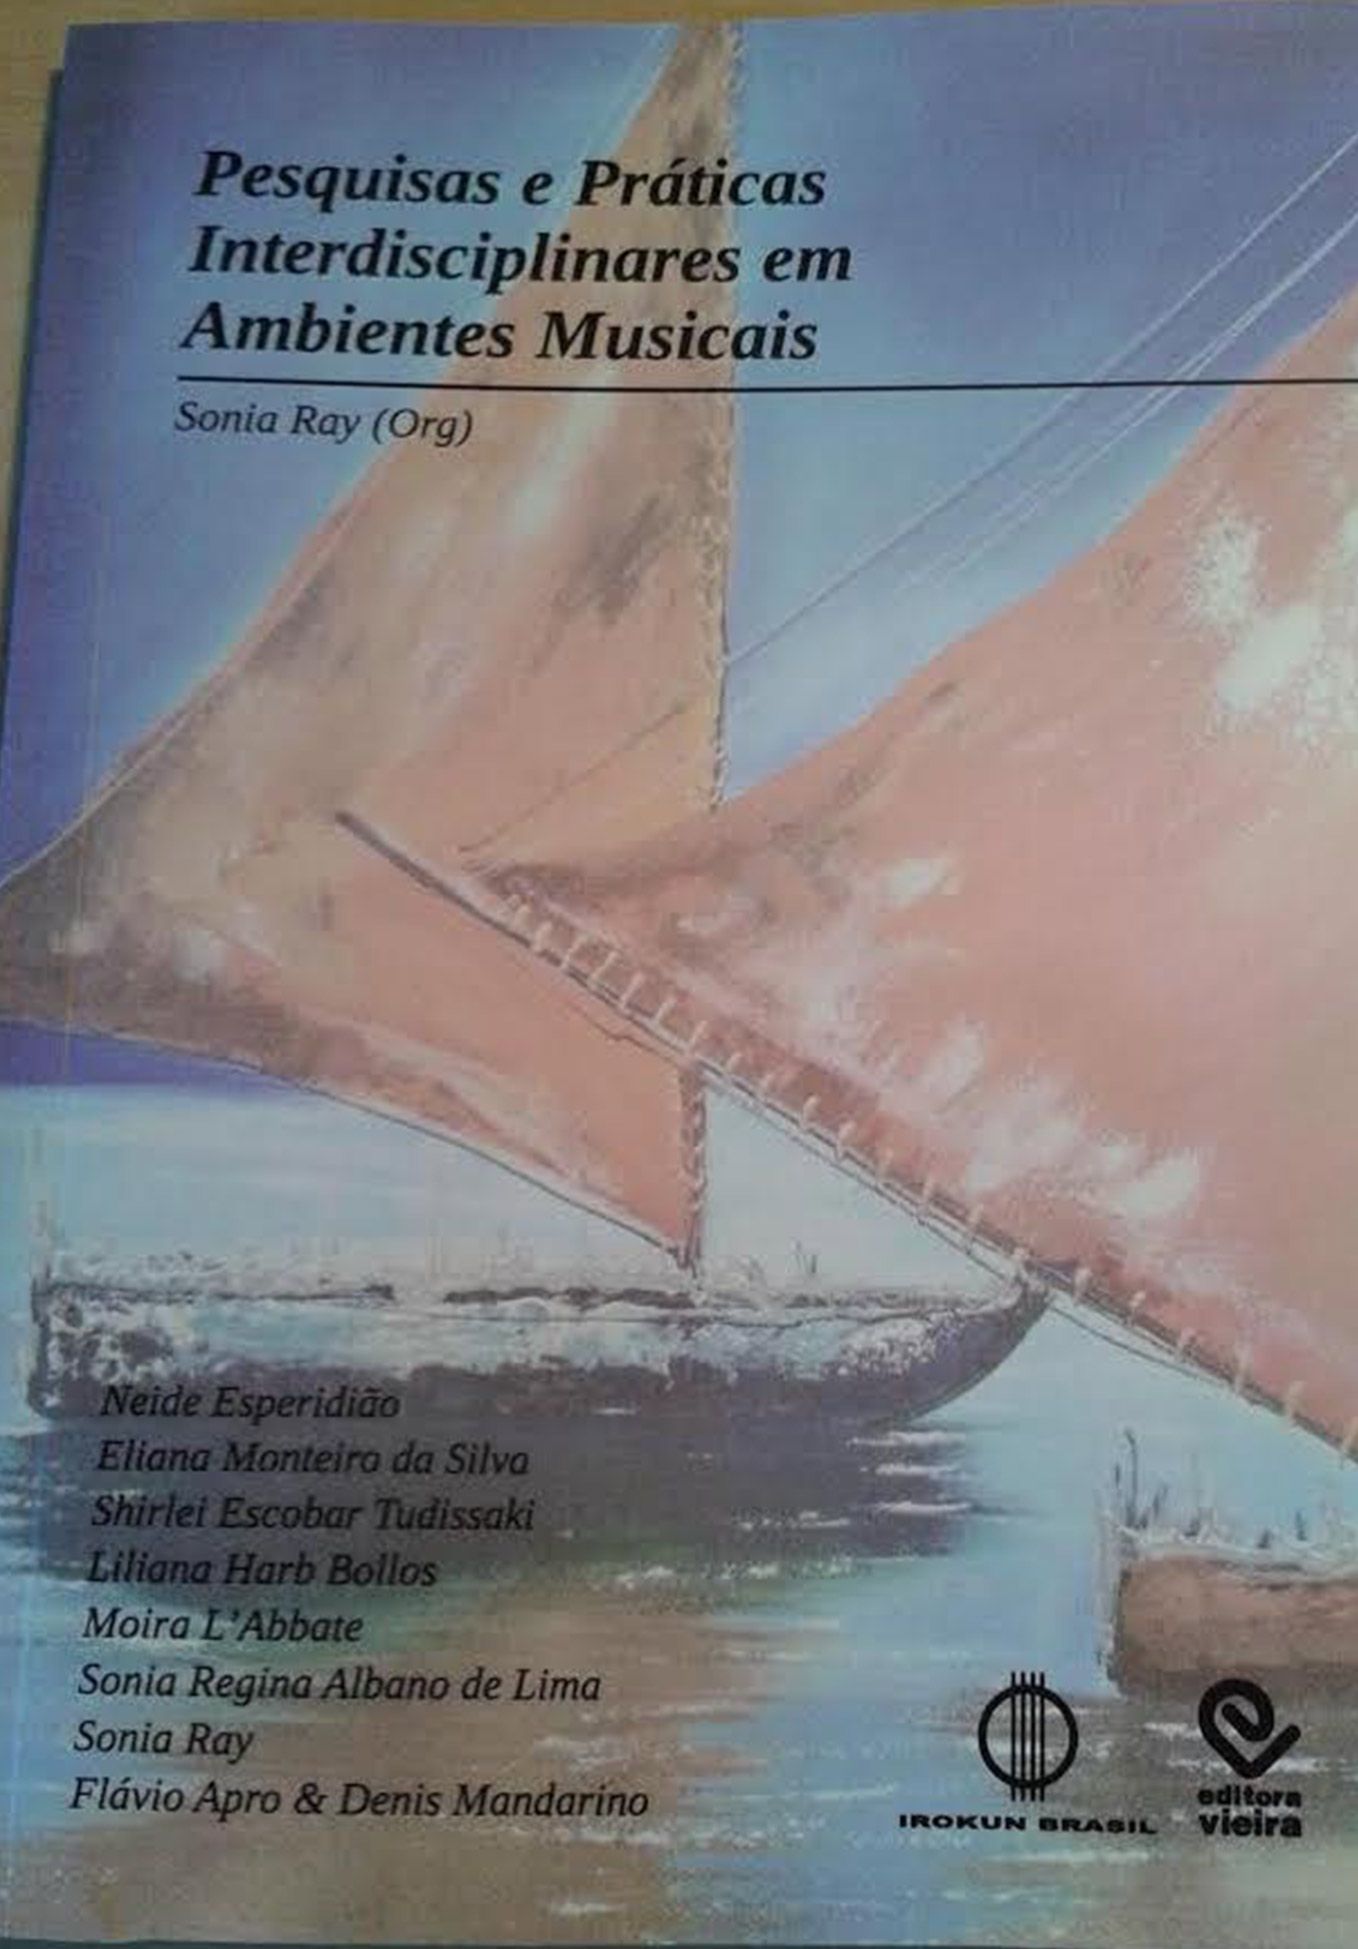 Ensino, música e interdisciplinaridade - Sonia Regina Albano de Lima -  E-Book - BookBeat